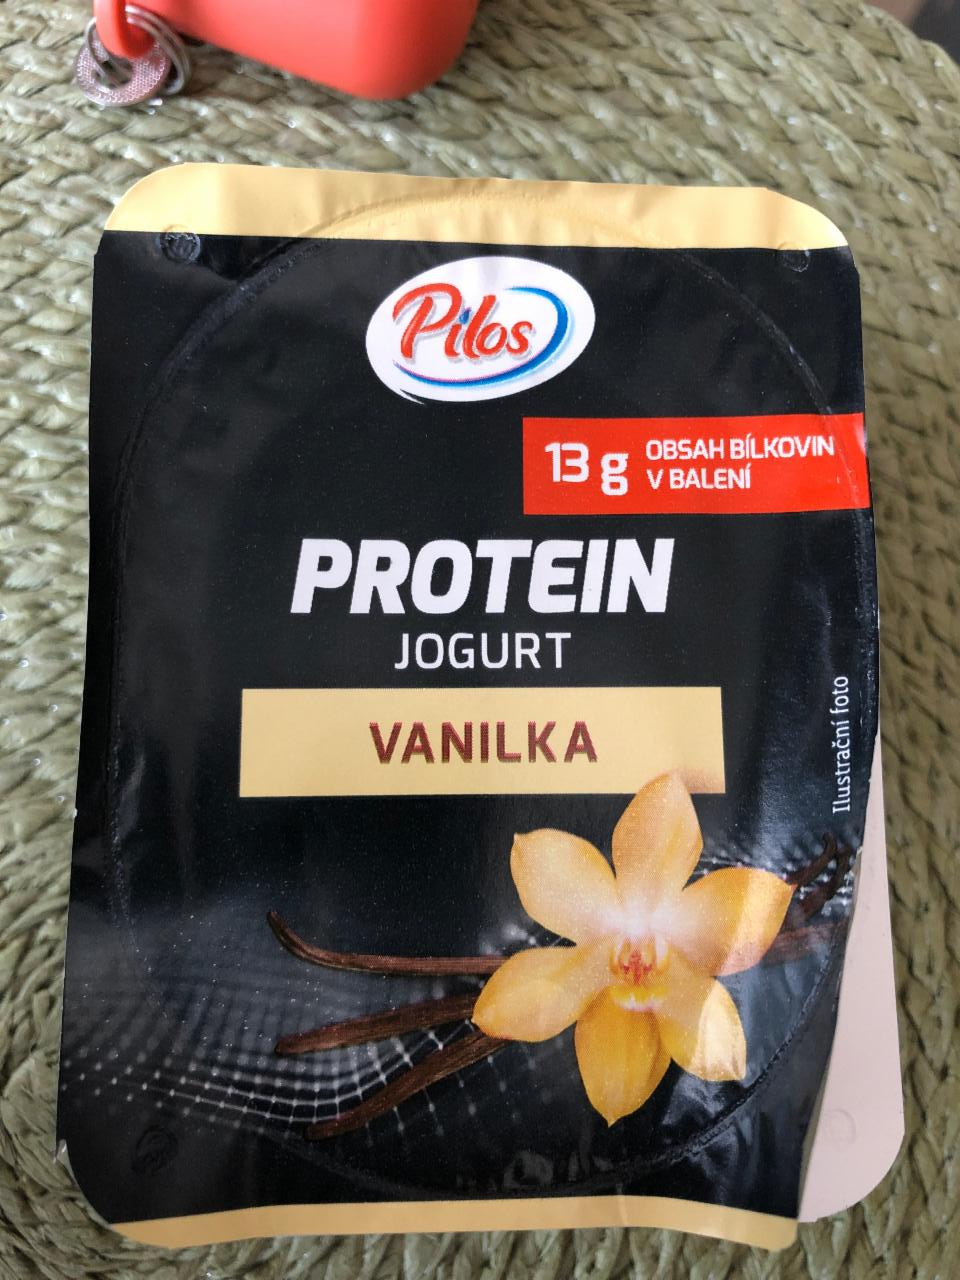 Фото - Protein jogurt vanilka Pilos